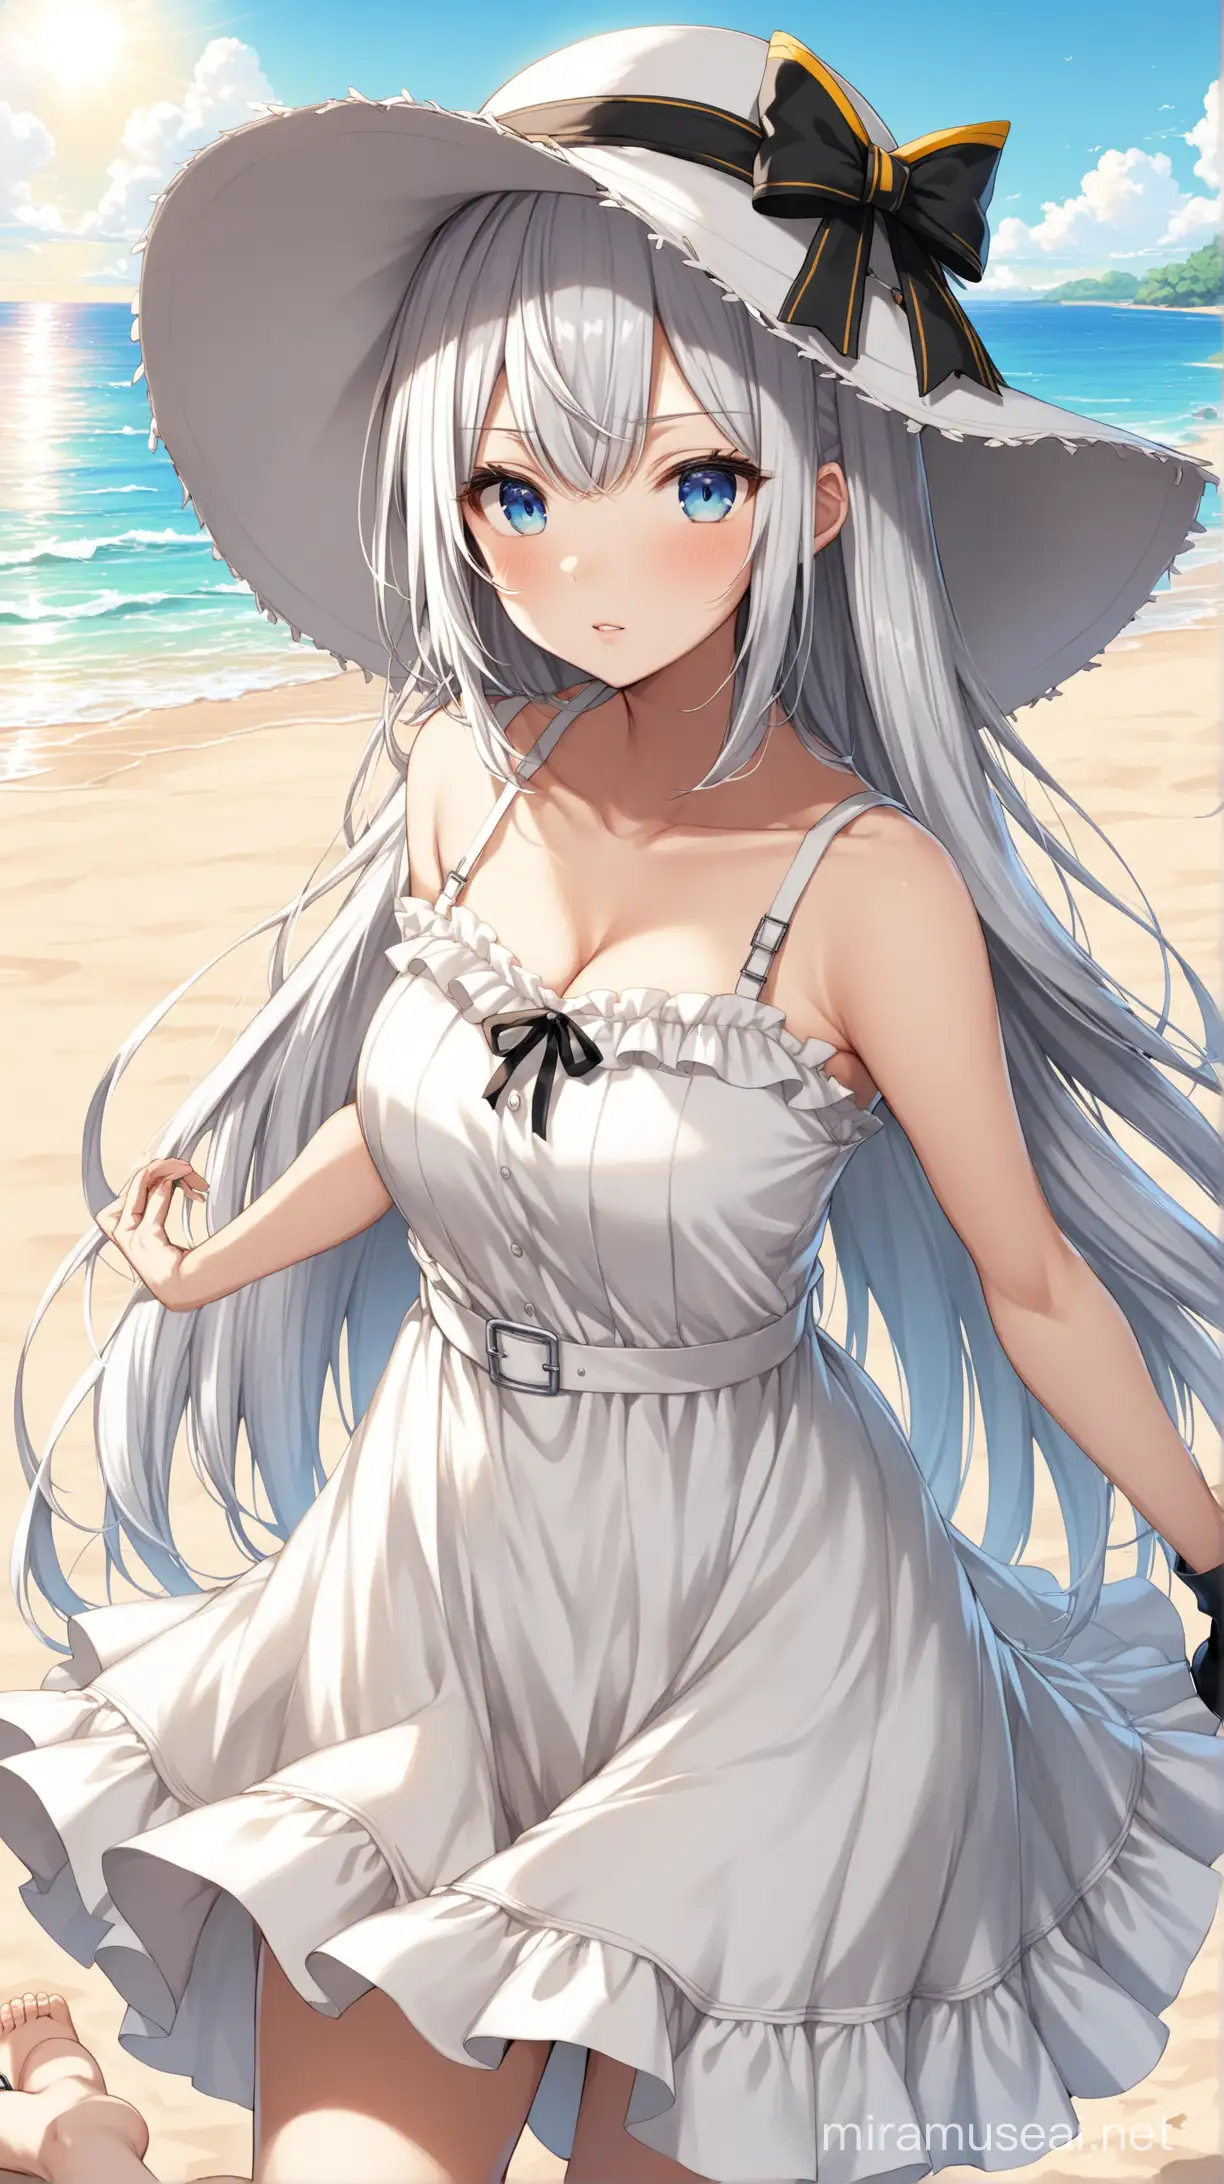 Aesthetic ((Kei Shirogane/Kaguya-sama: Love is War)), ((long silver white hair)), ((blue eyes)), a white sundress with thin straps, skirt ruffles, ((wearing a large brim white floppy beach hat))